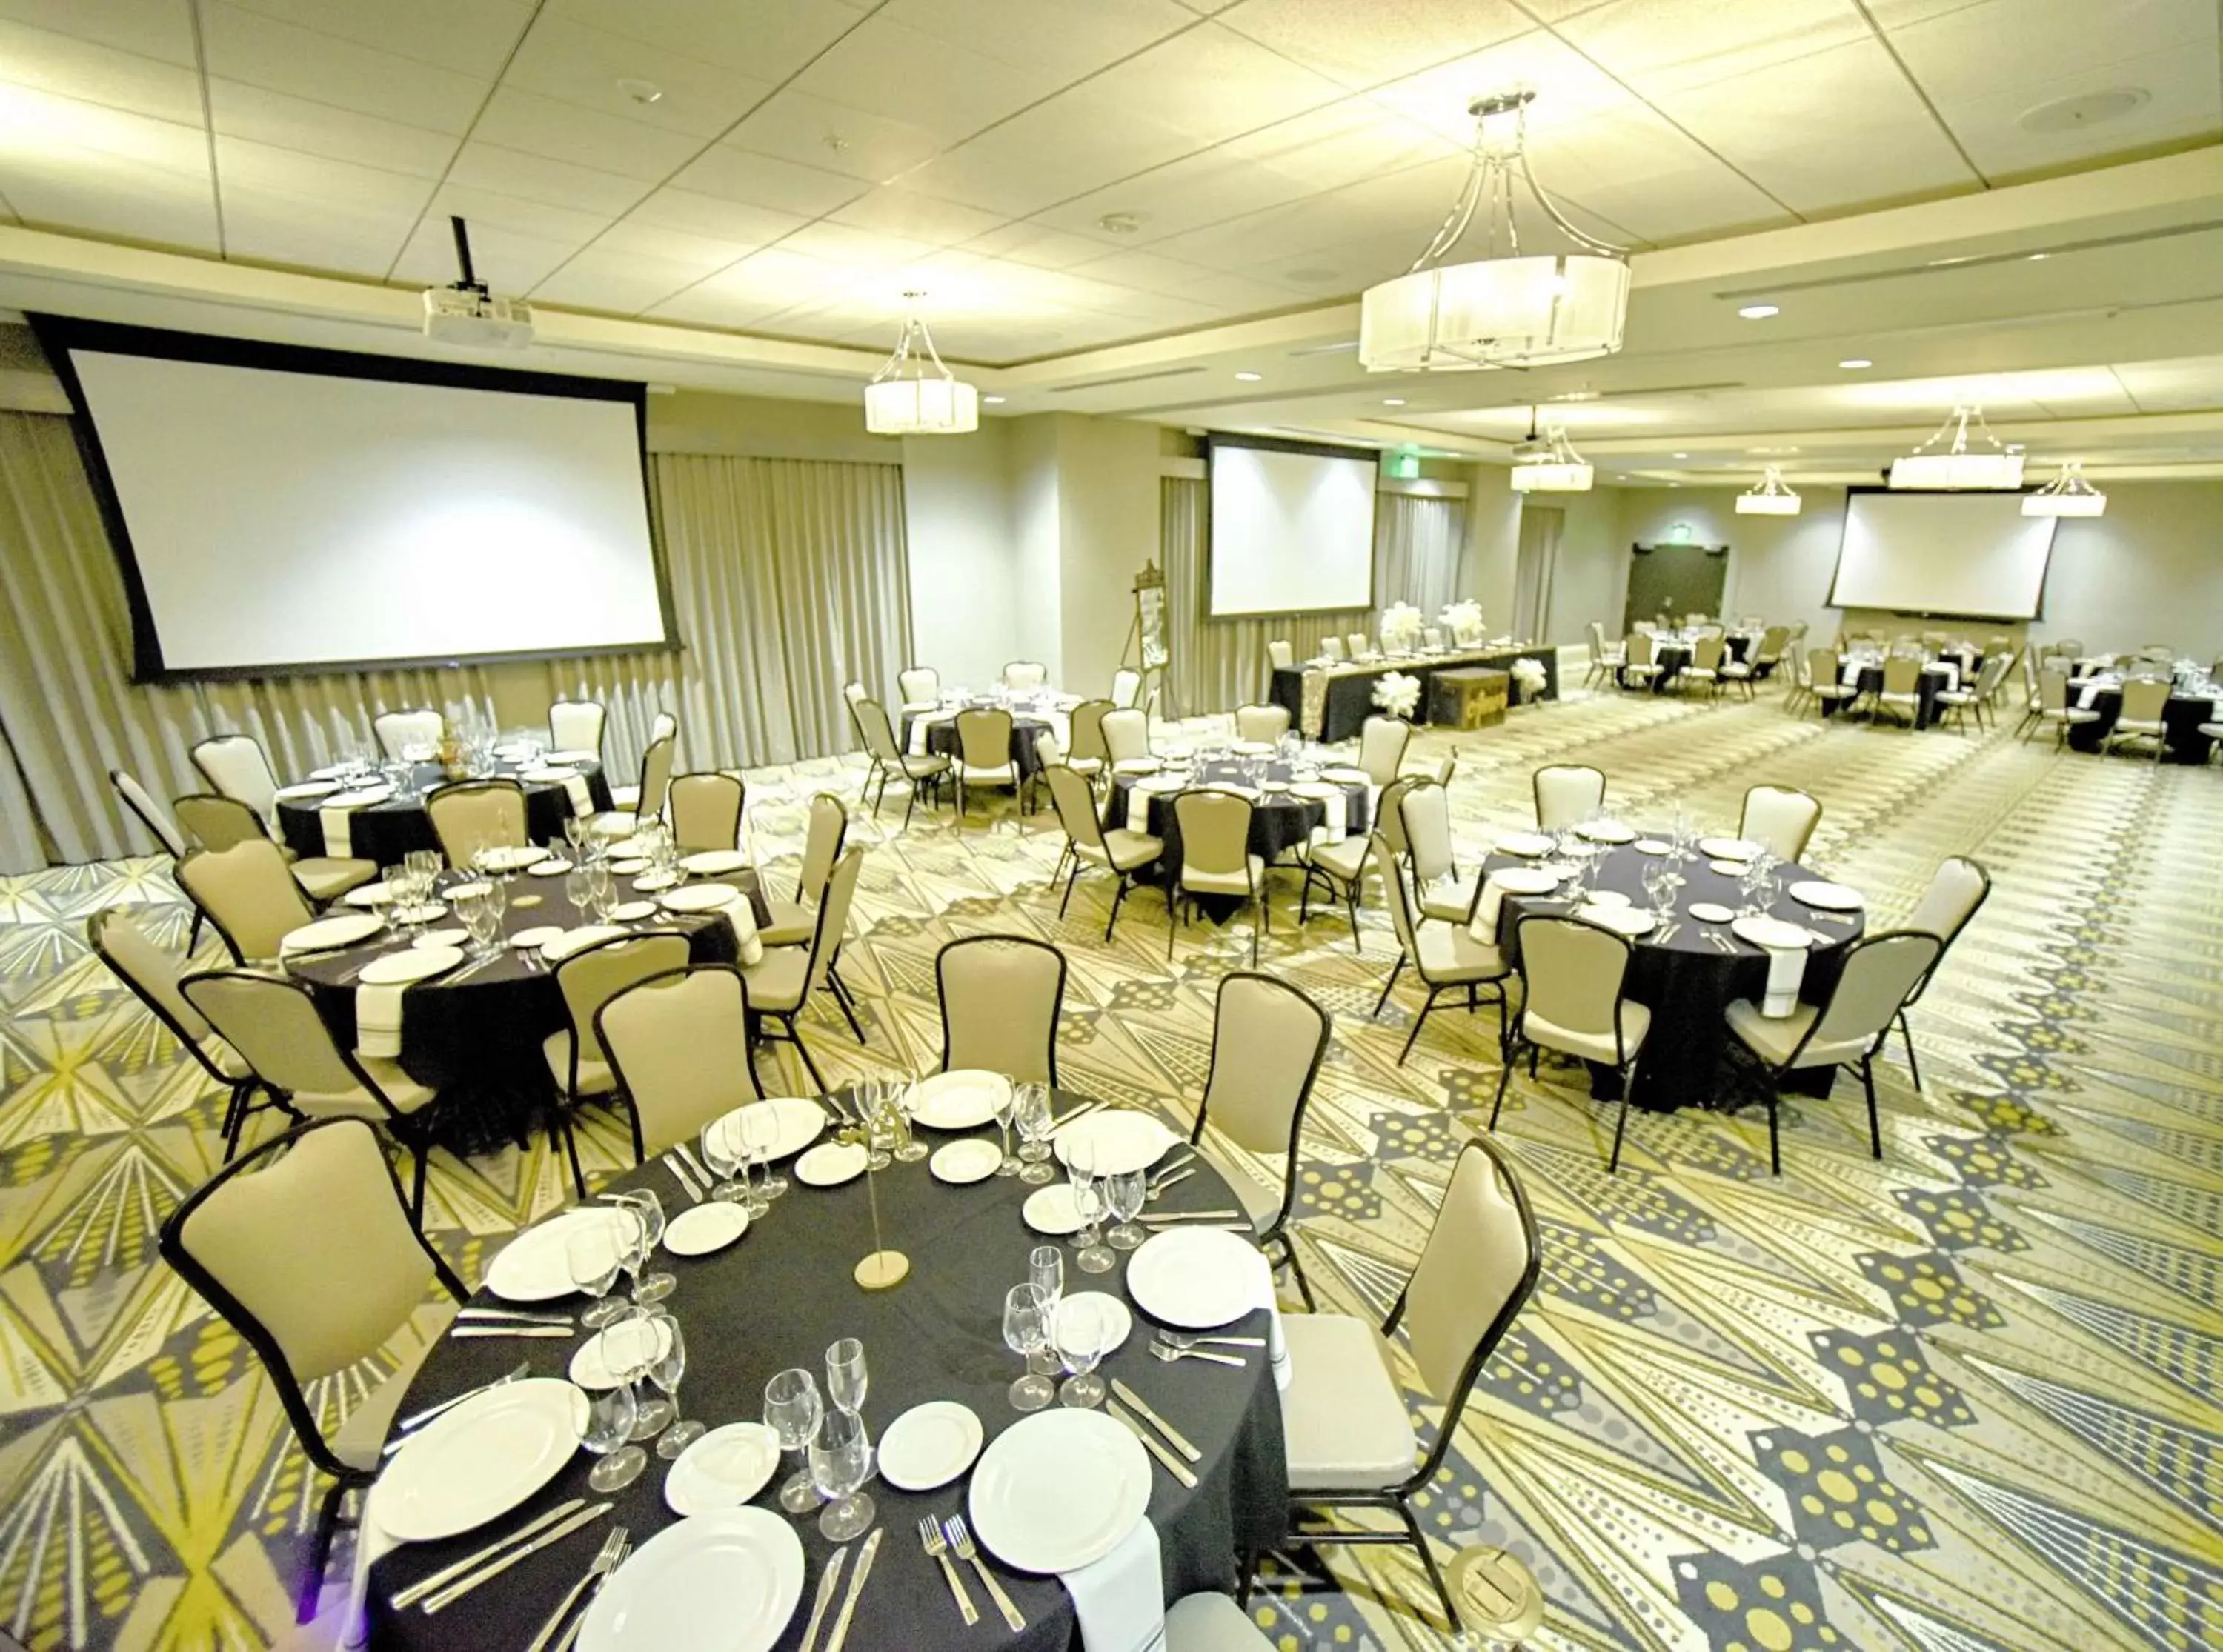 Meeting/conference room, Restaurant/Places to Eat in Hilton Garden Inn Santa Barbara/Goleta